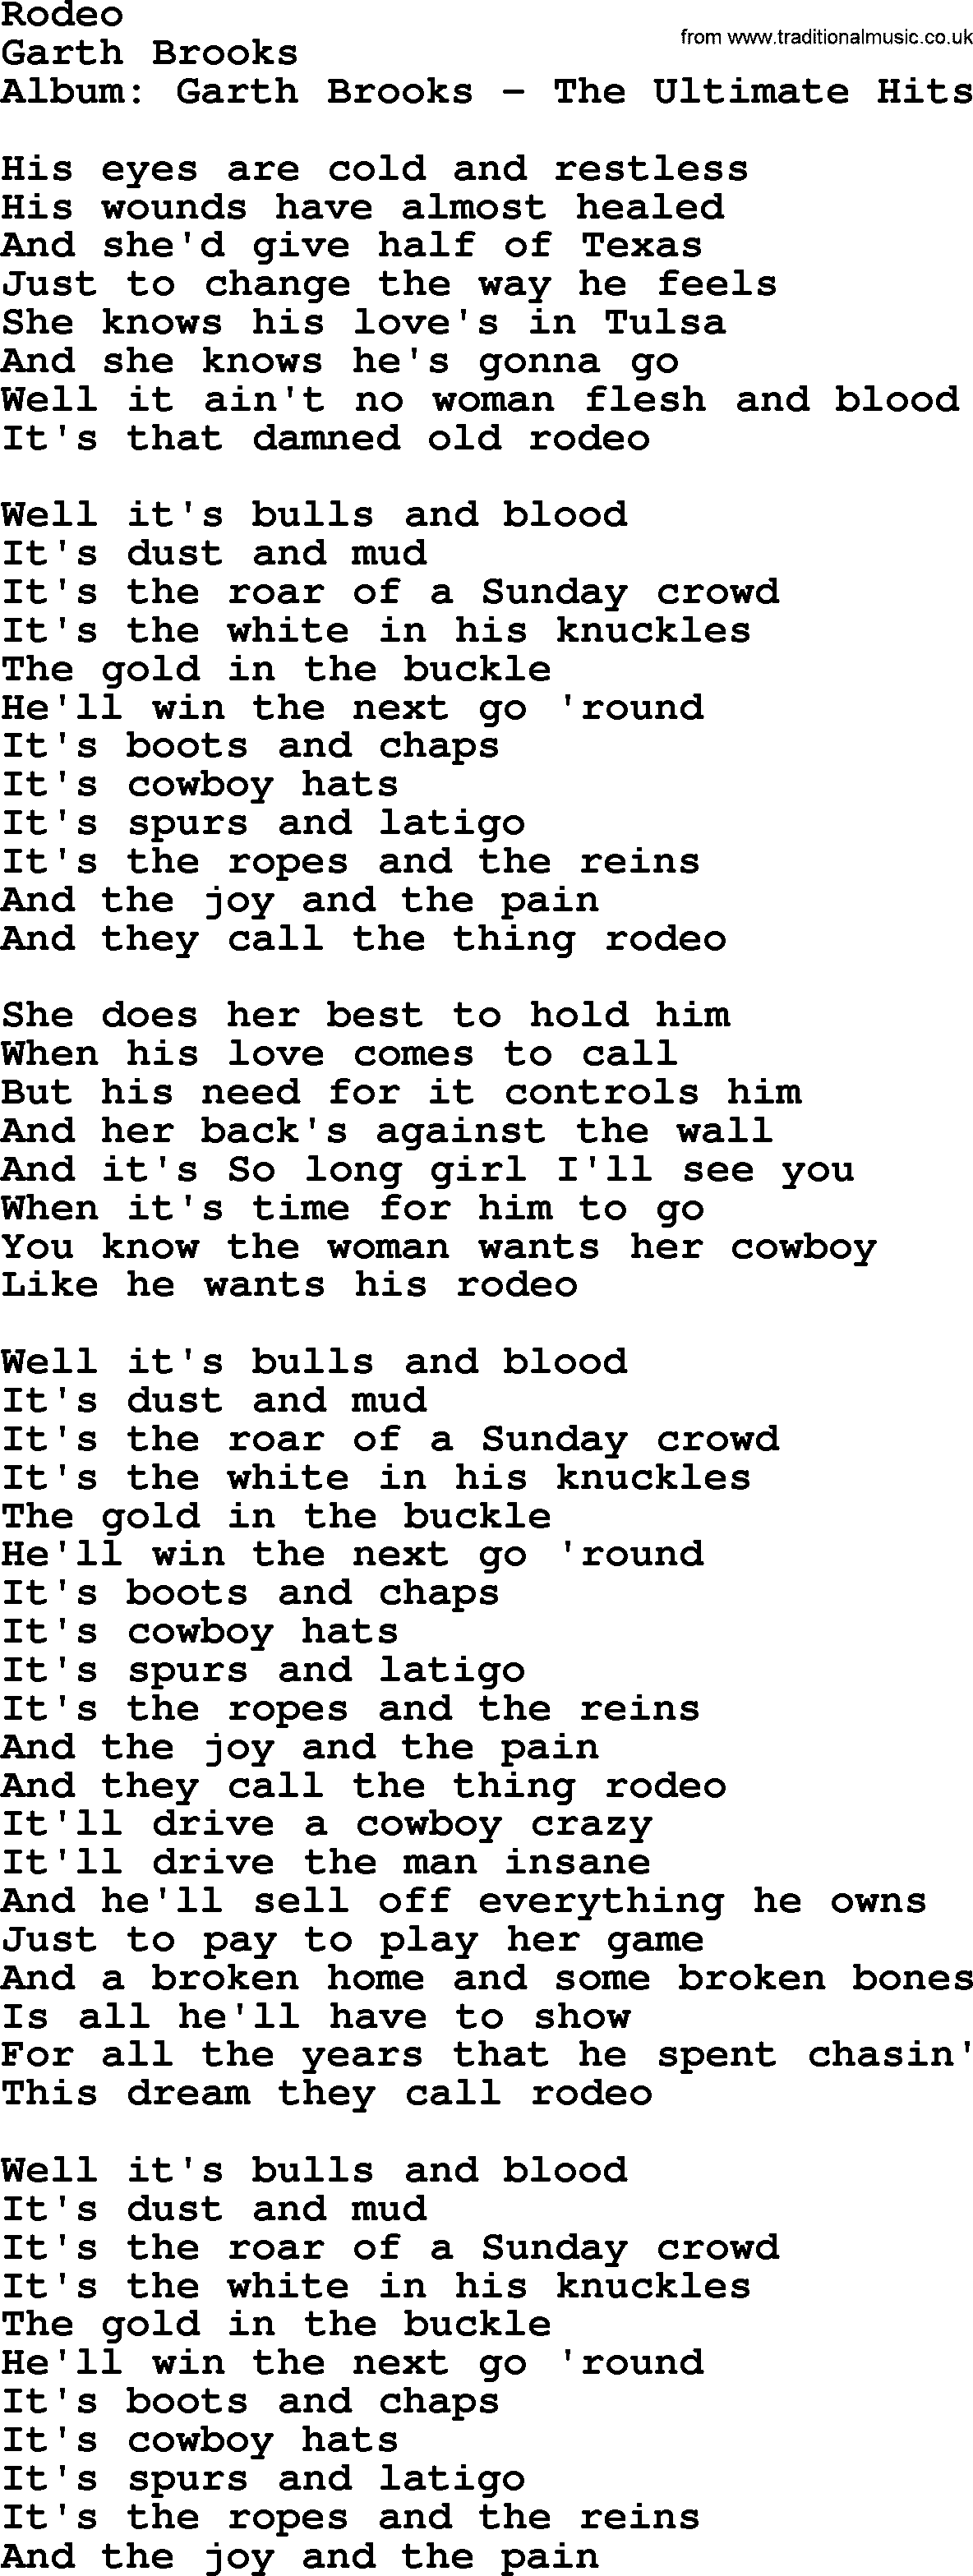 Garth Brooks song: Rodeo, lyrics